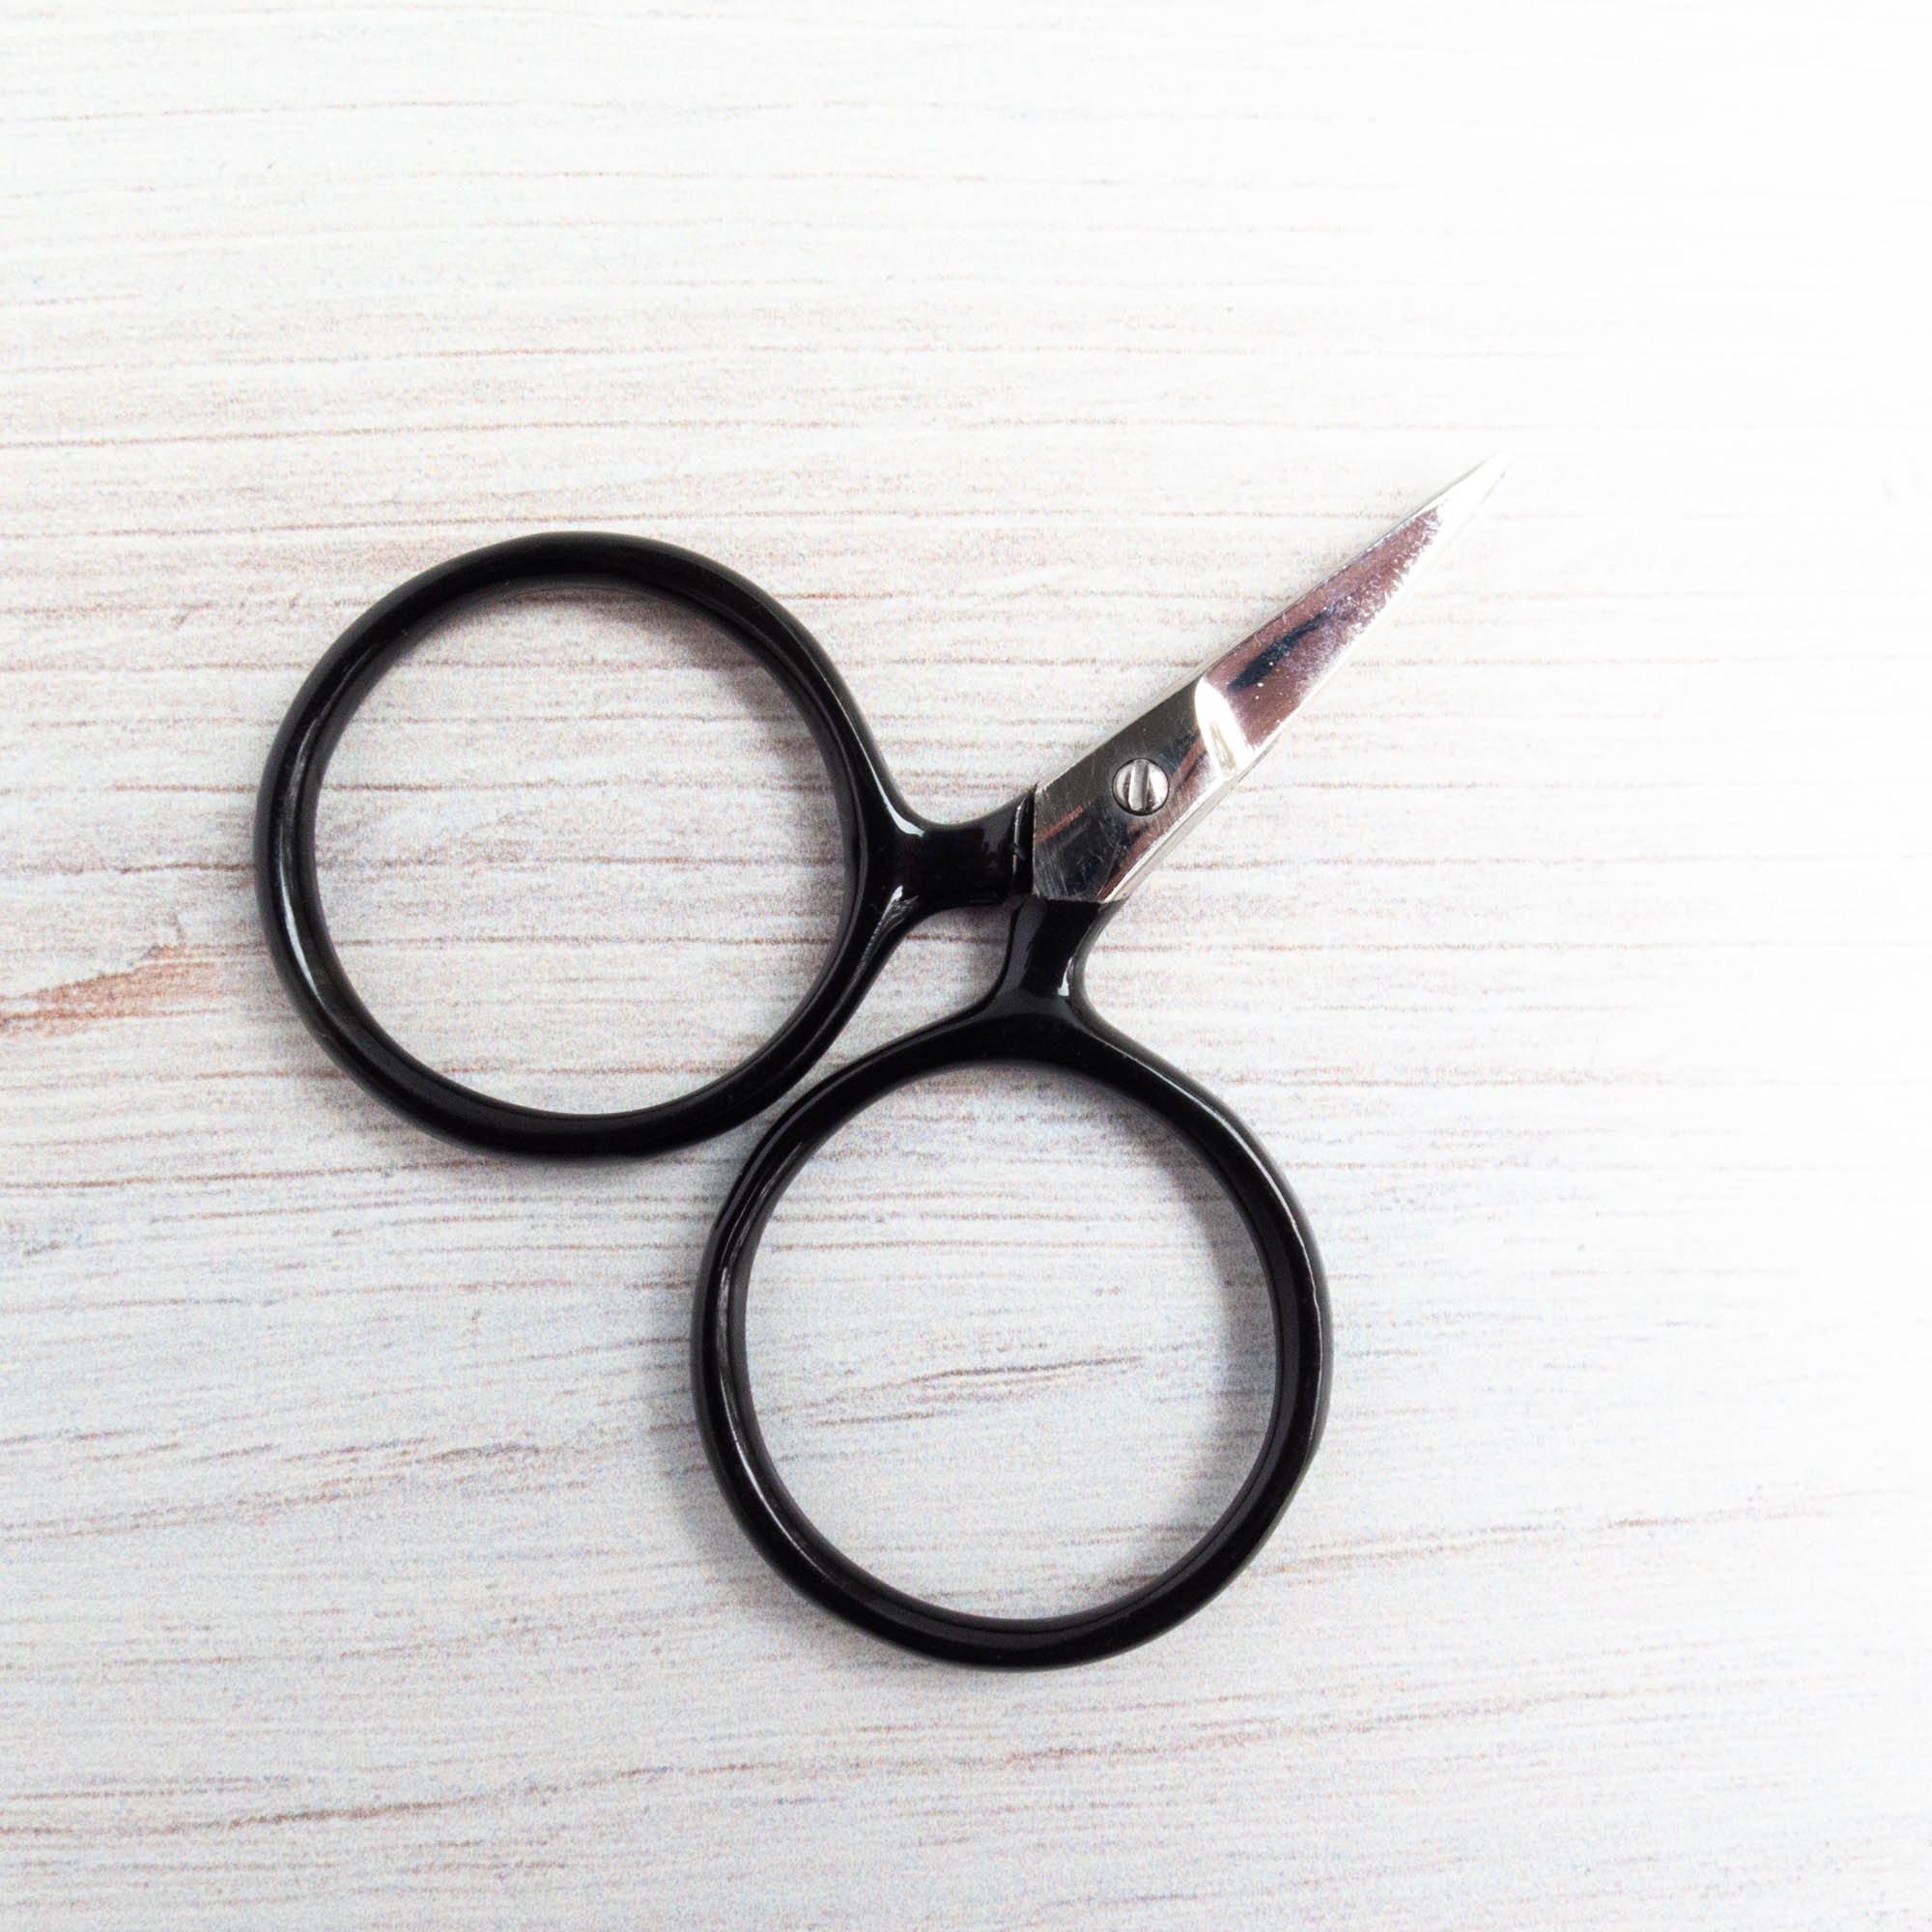 Cute Embroidery Scissors Small Black Handle Scissors, Modern